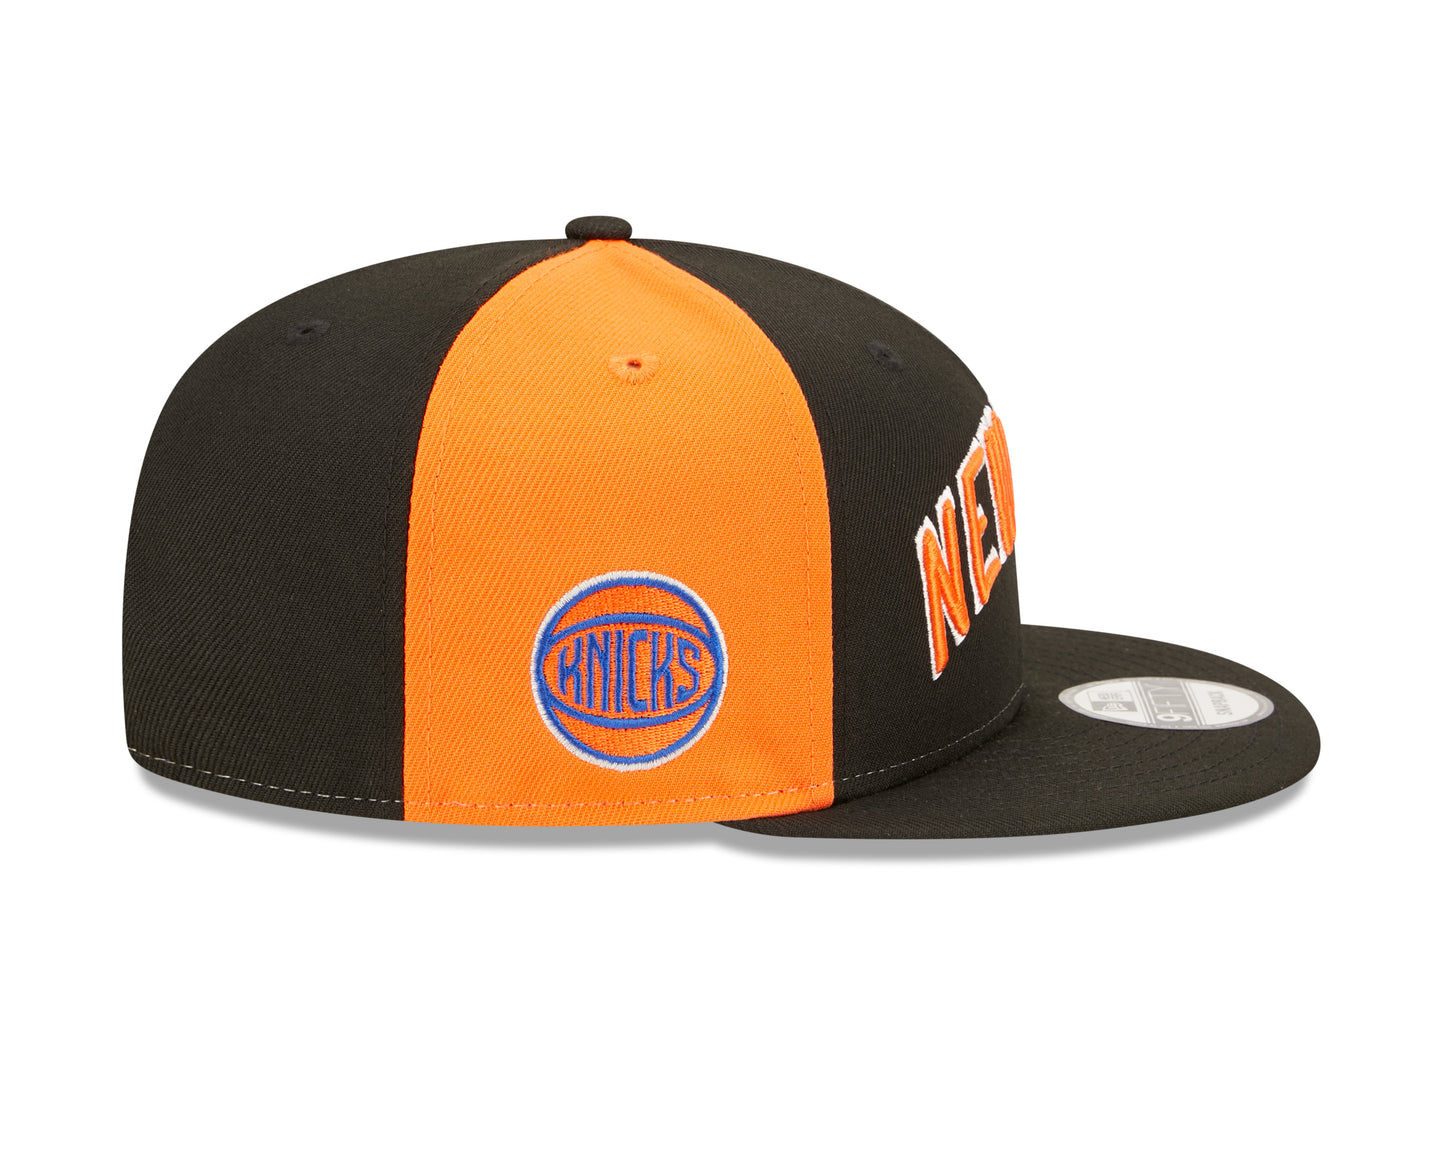 New York Knicks New Era City Edition 9FIFTY Snap Back Hat - Black/Orange